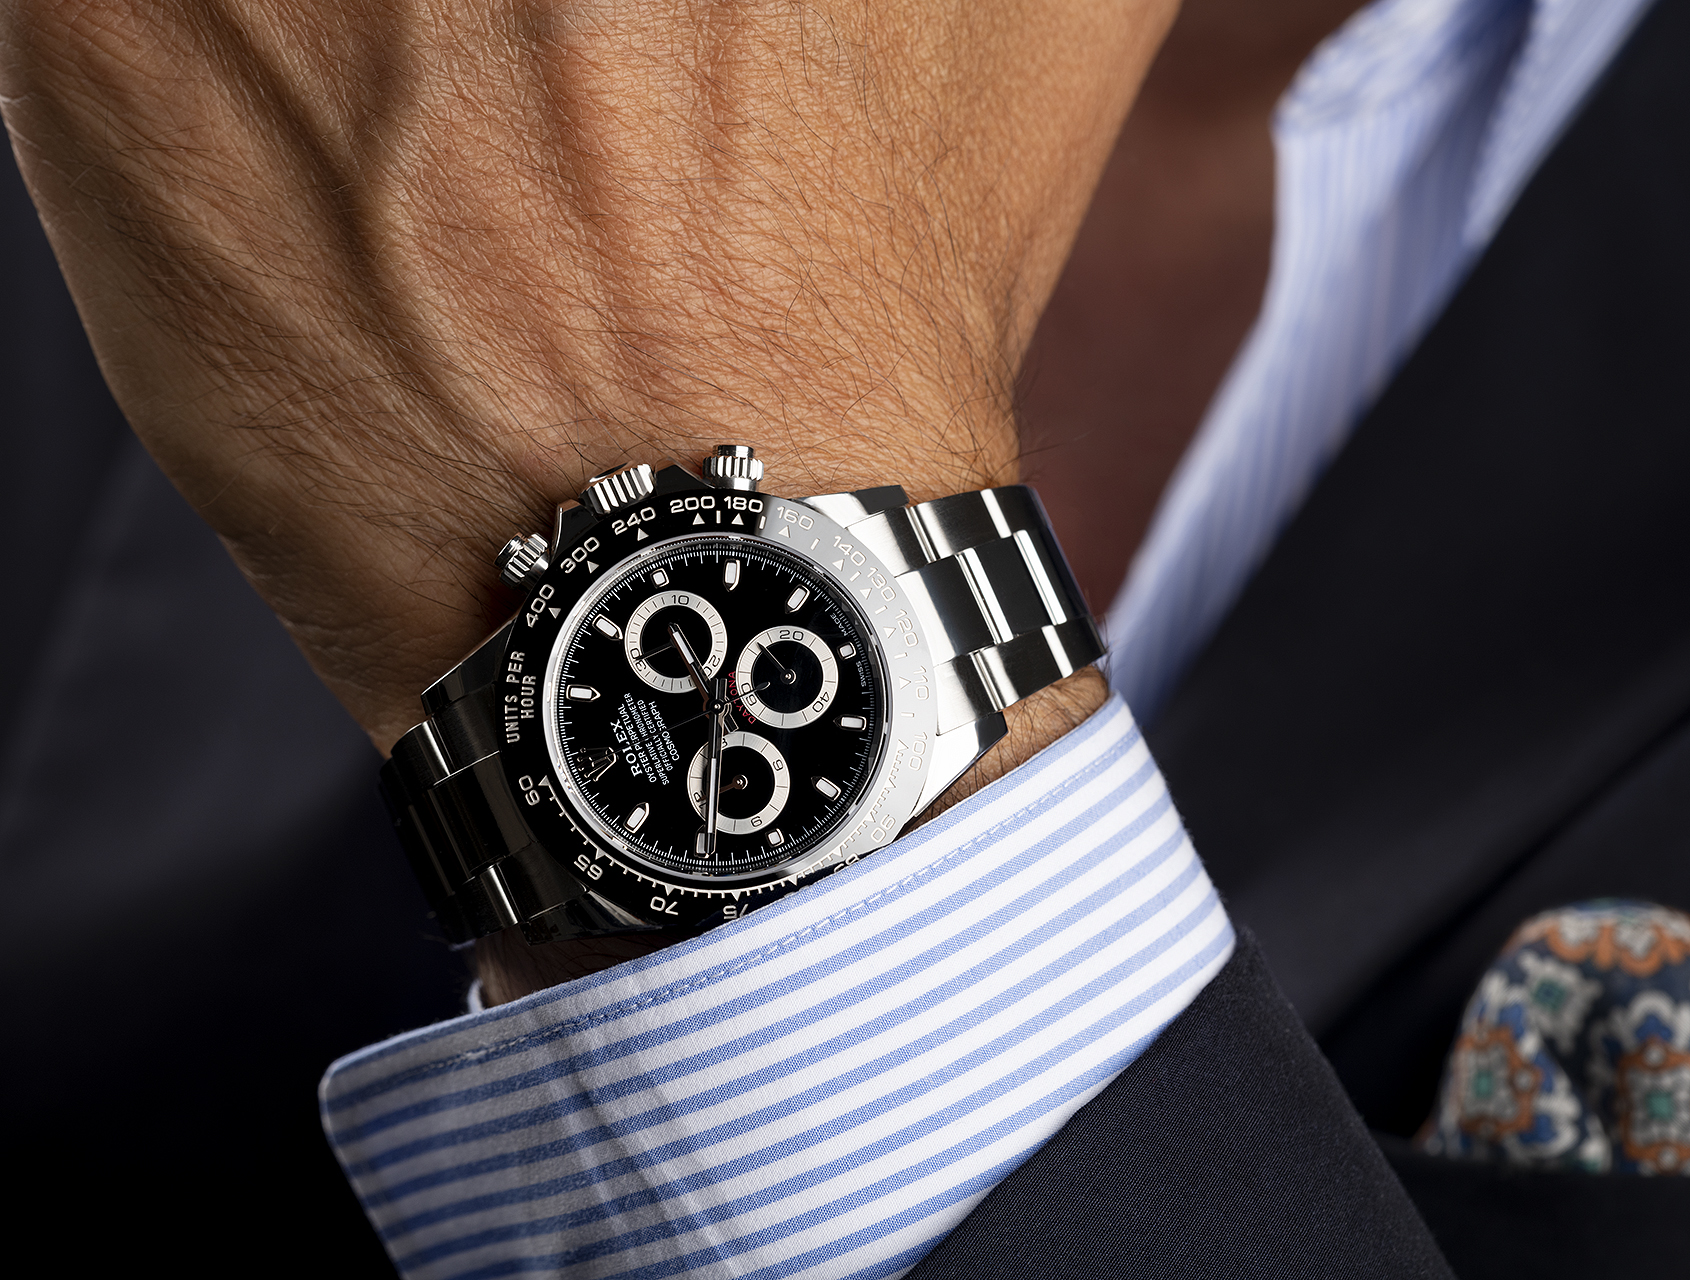 Rolex Cosmograph Daytona Watches | ref 116500LN Rolex Warranty to 2027 | The Watch Club